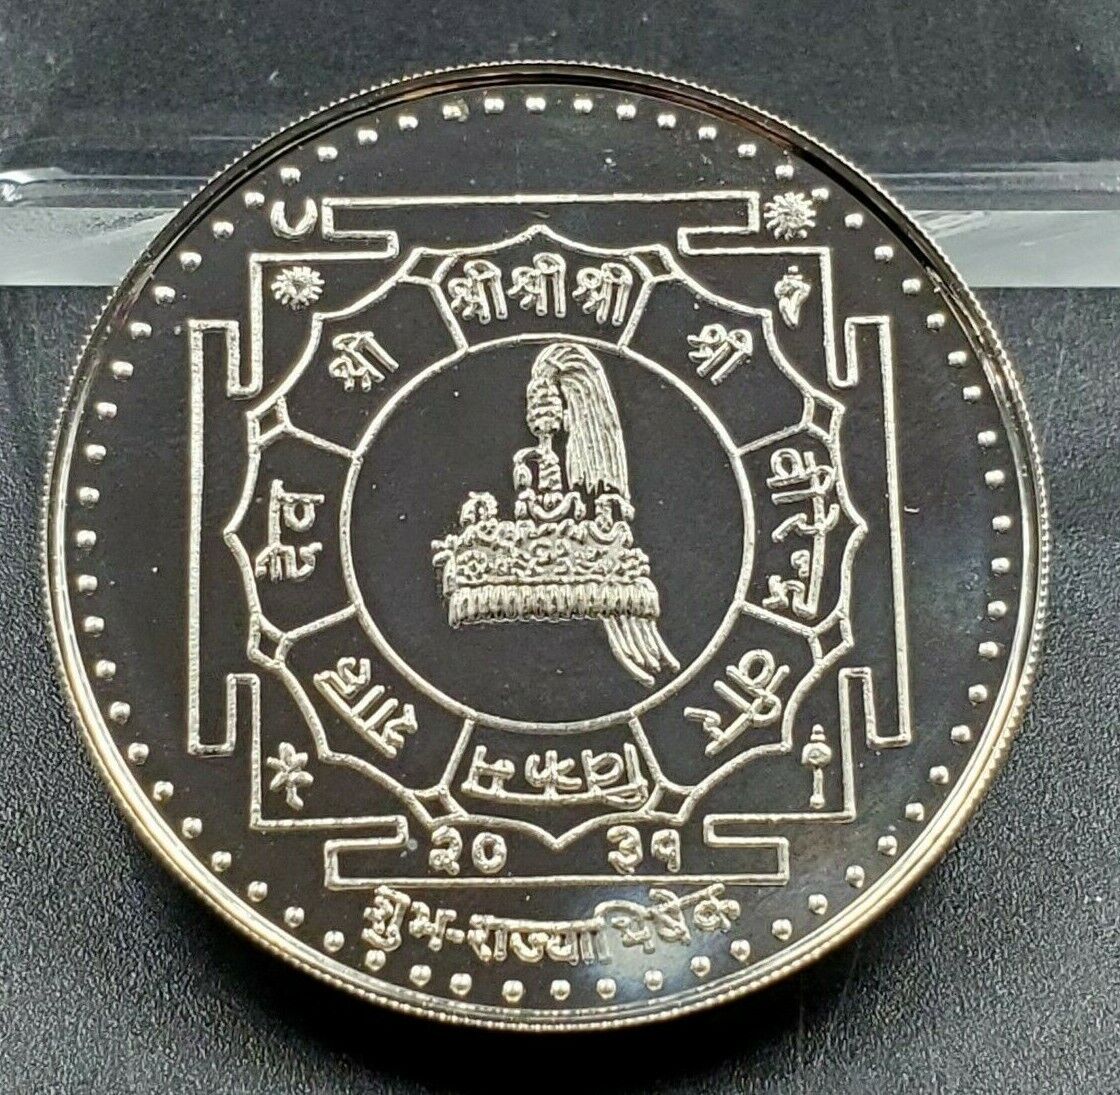 1974 Nepal SHAH DYNASTY 25 Rupee KM# 838a Birendra Bir Bikram Gem Proof Silver